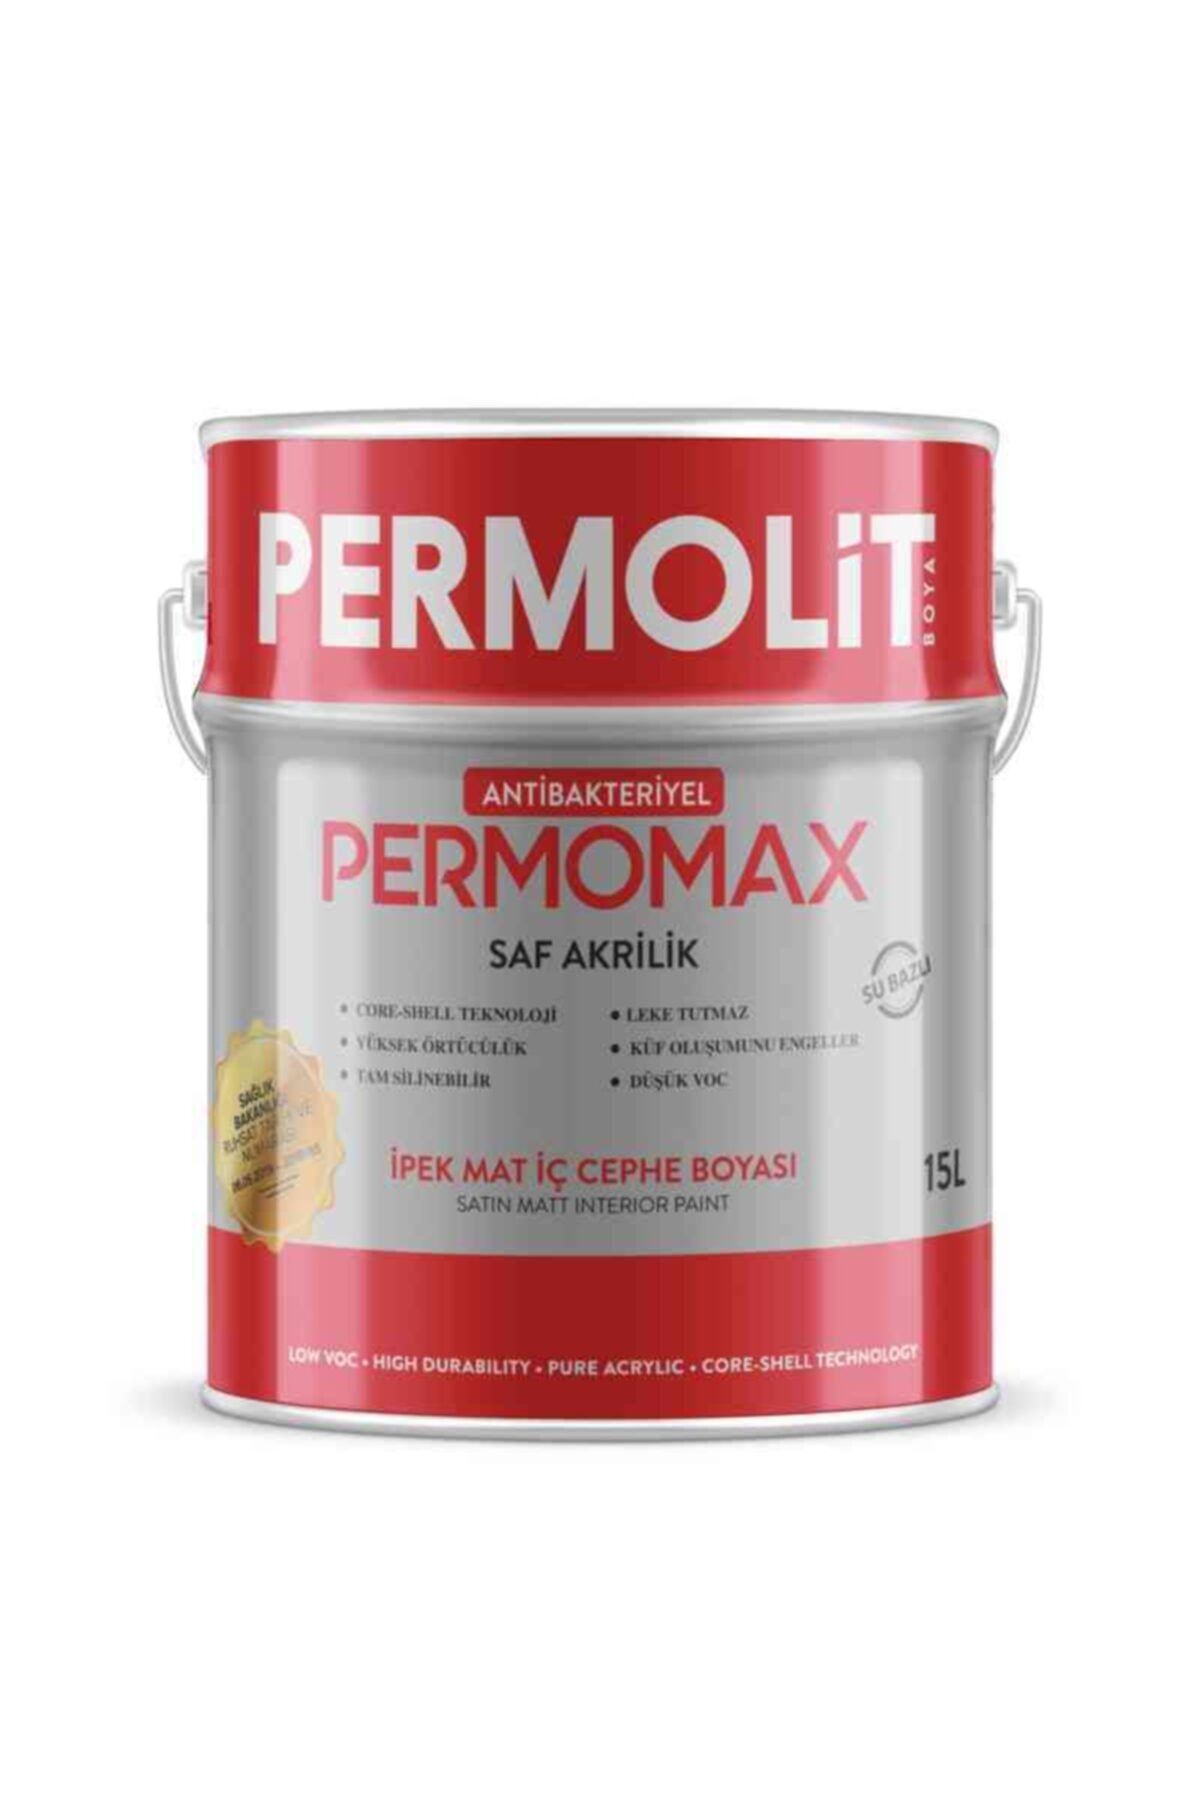 Permolit Permomax Antibakteriyel Ipek Mat Iç Cephe Boyası 3,5kg - Tatlı Krem